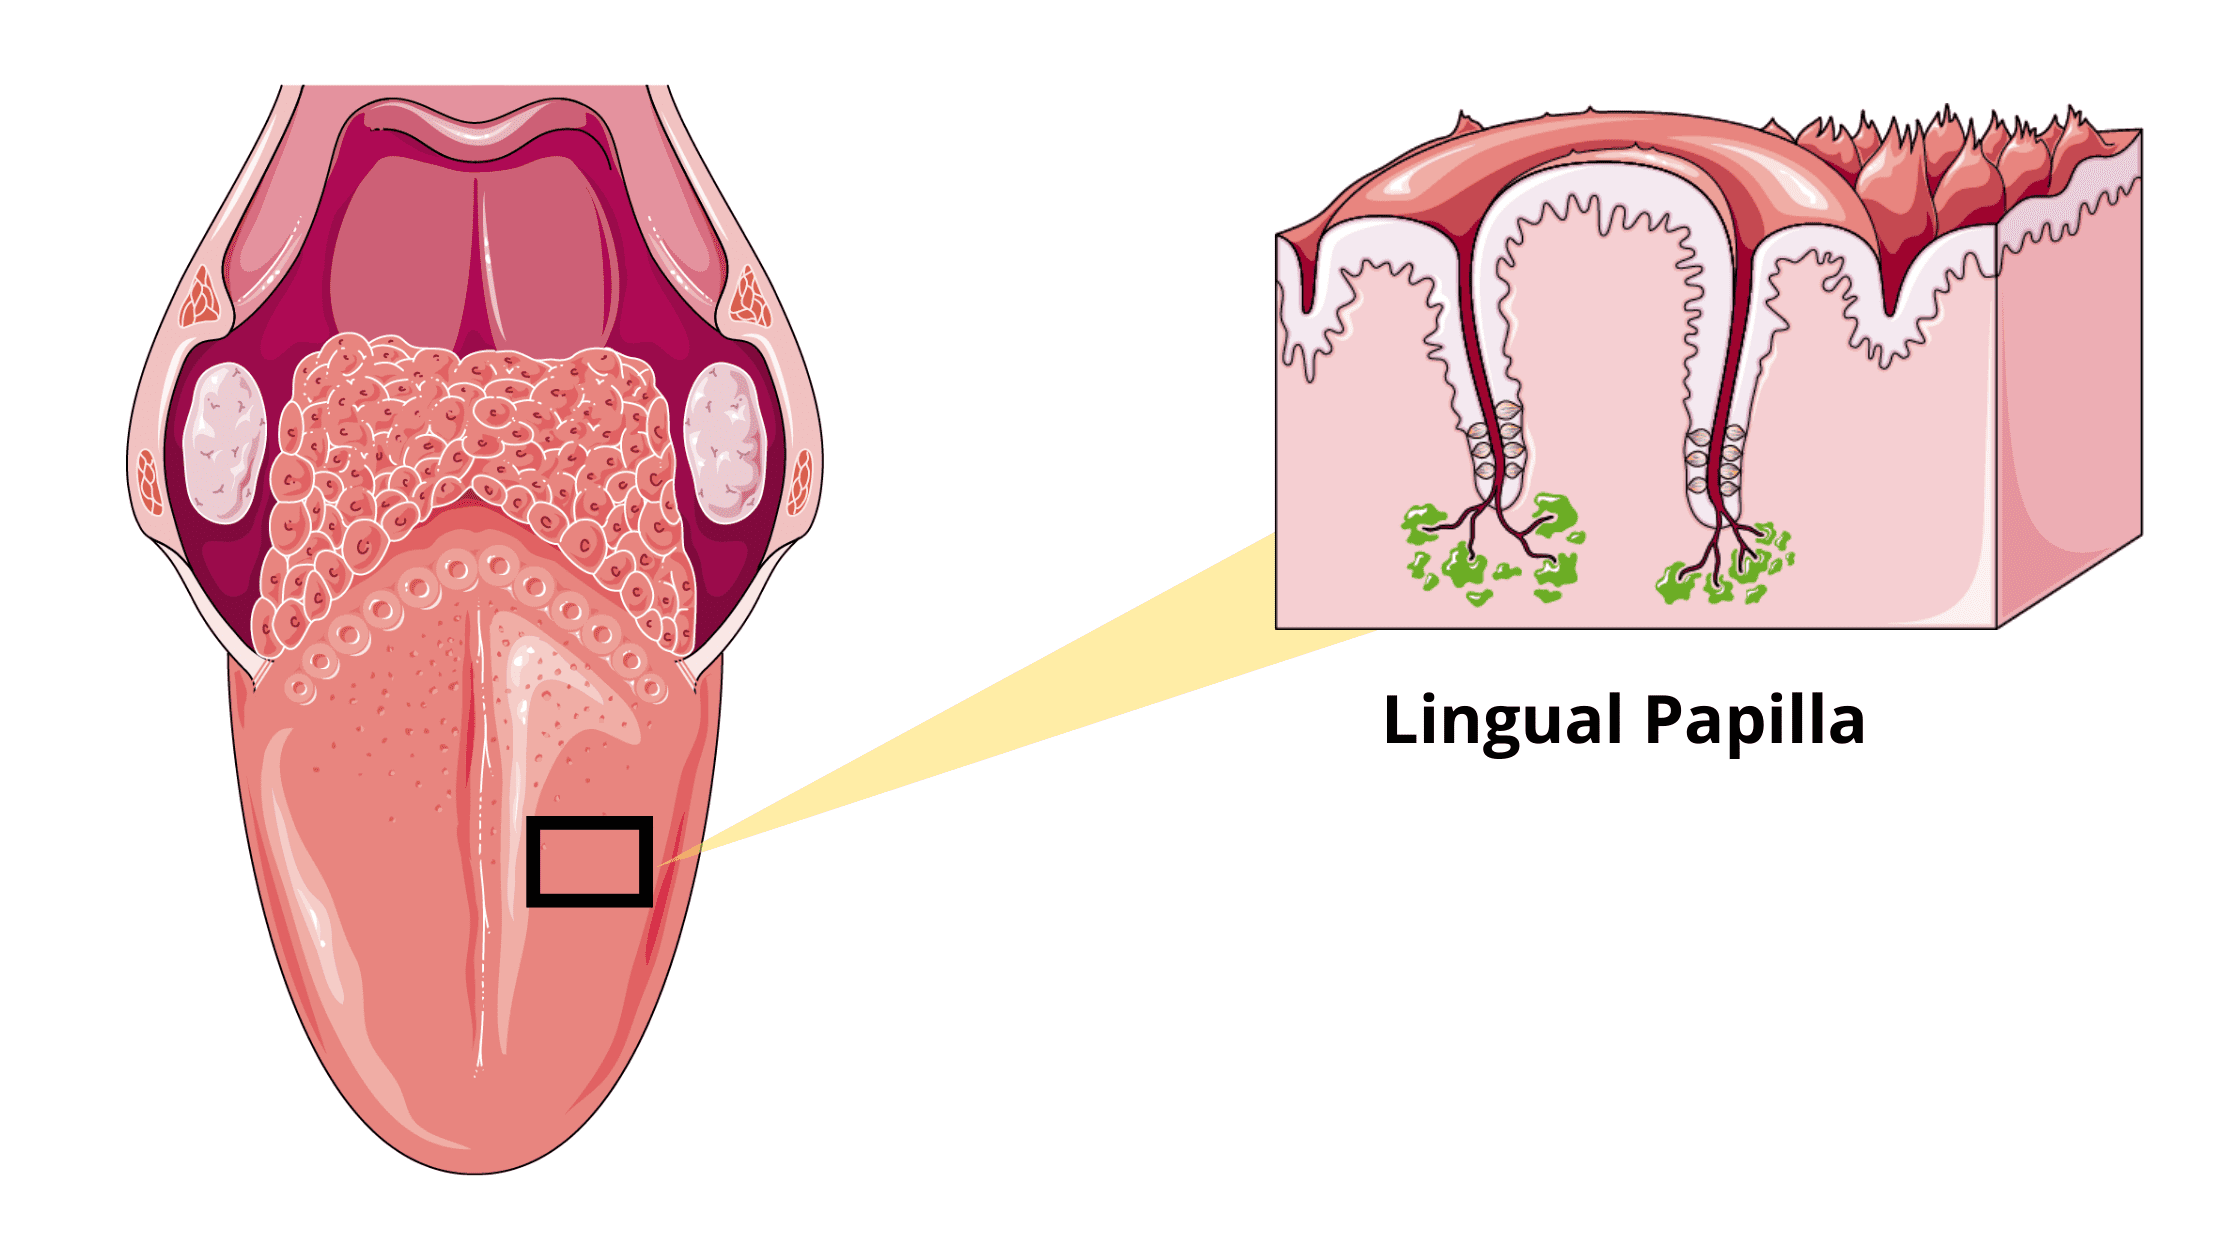 Tongue papillae